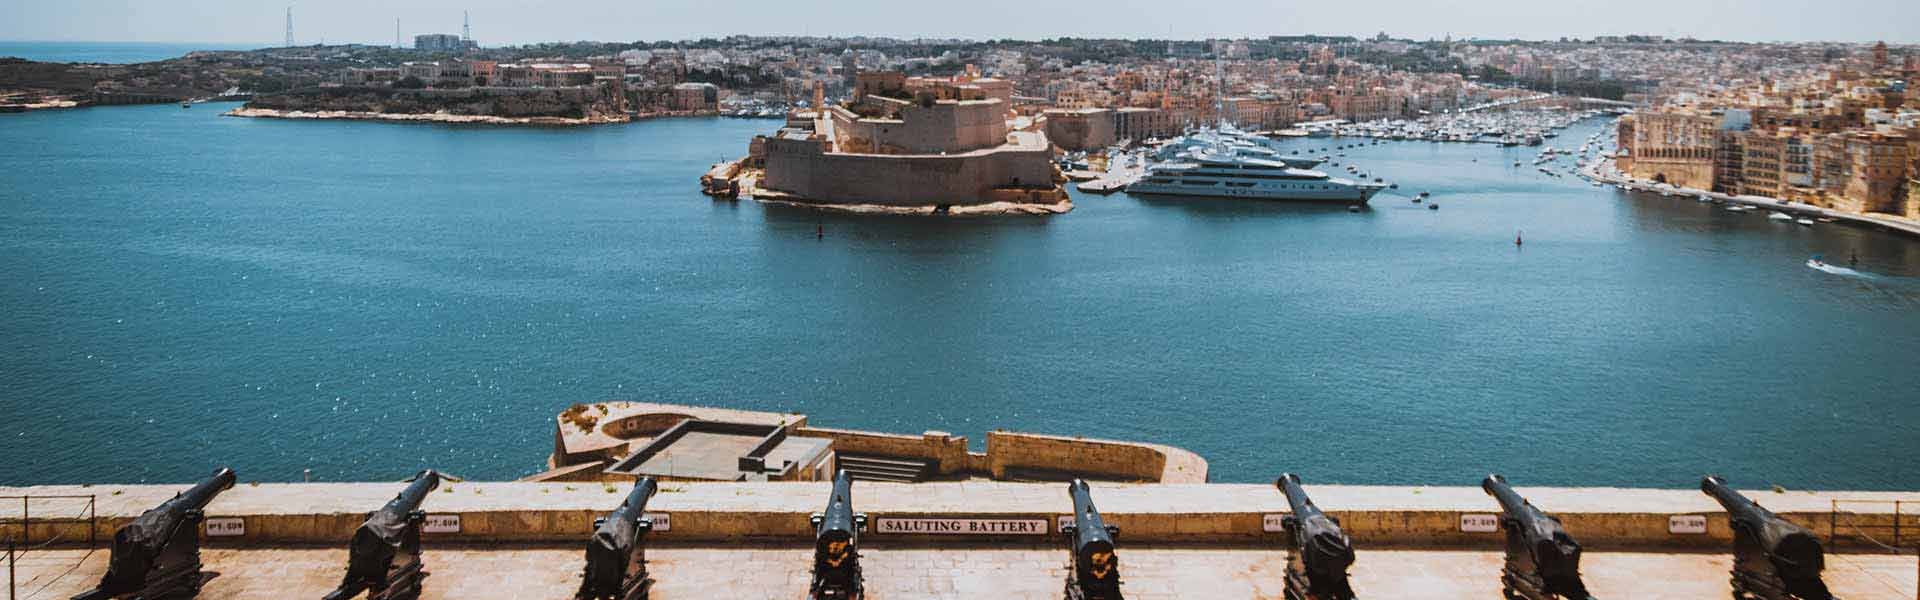 Cost of Living in Malta